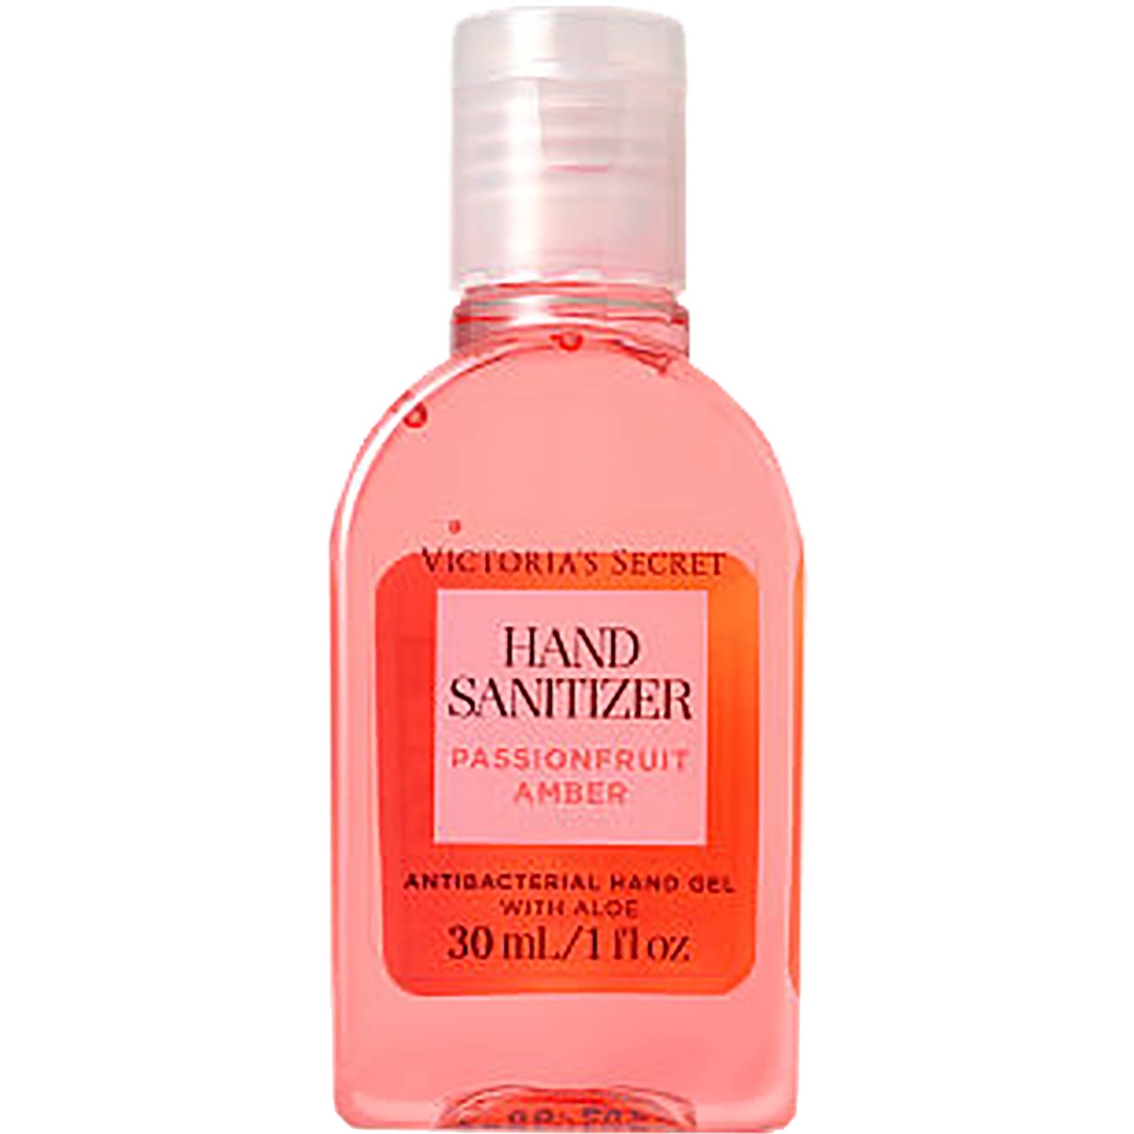 Victoria's Secret Passionfruit and Amber Gel Hand Sanitizer 1 oz.